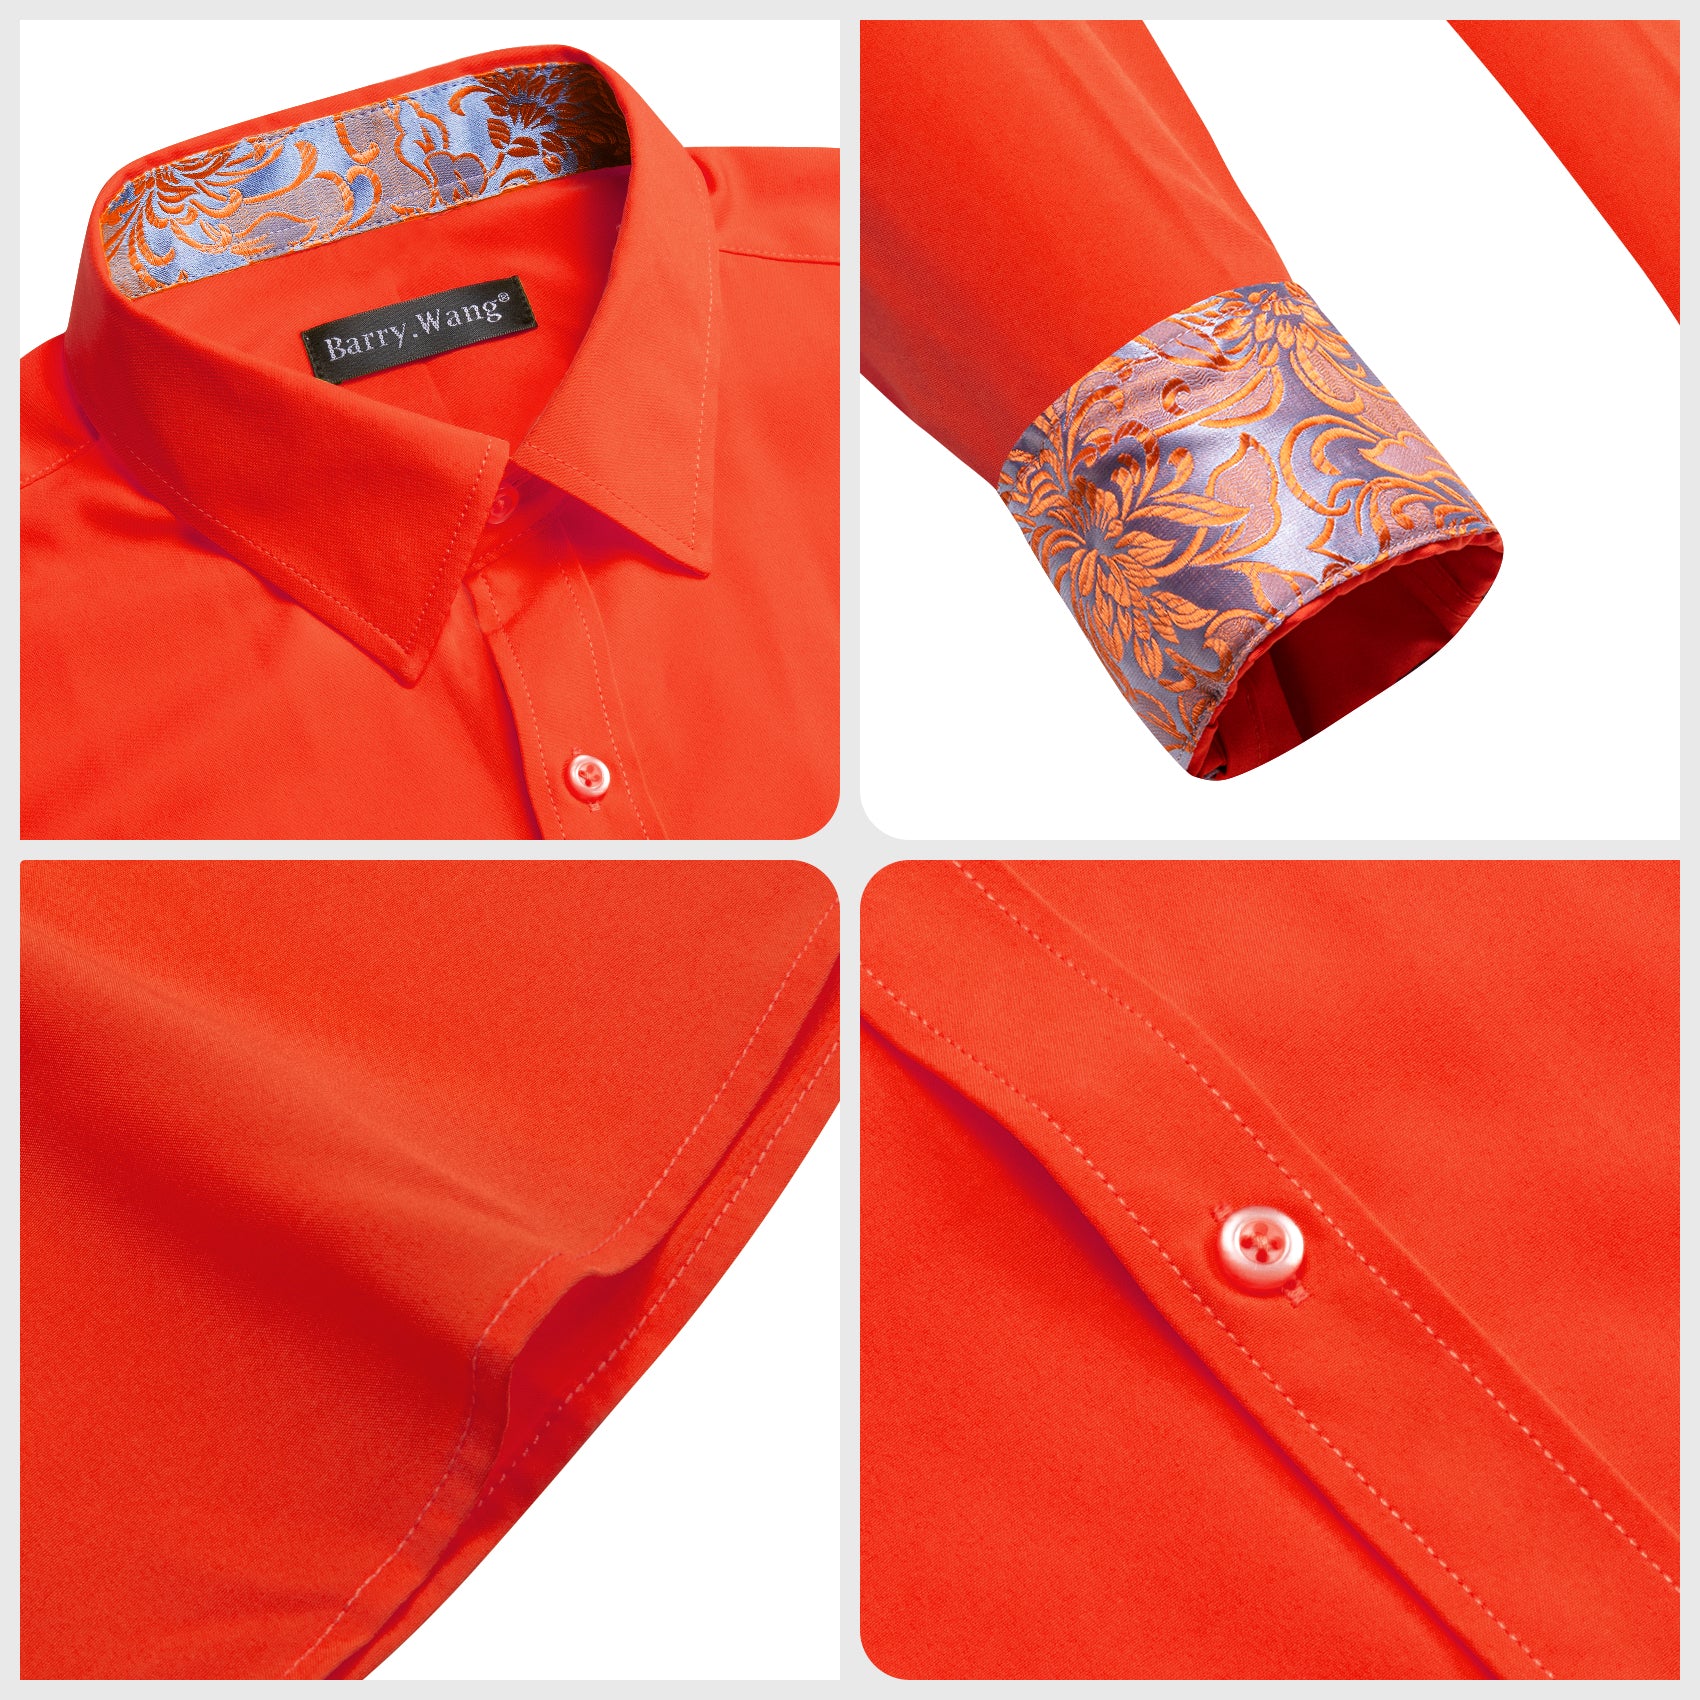 Barry.wang Formal Red Orange Splicing Men's Business Shirt